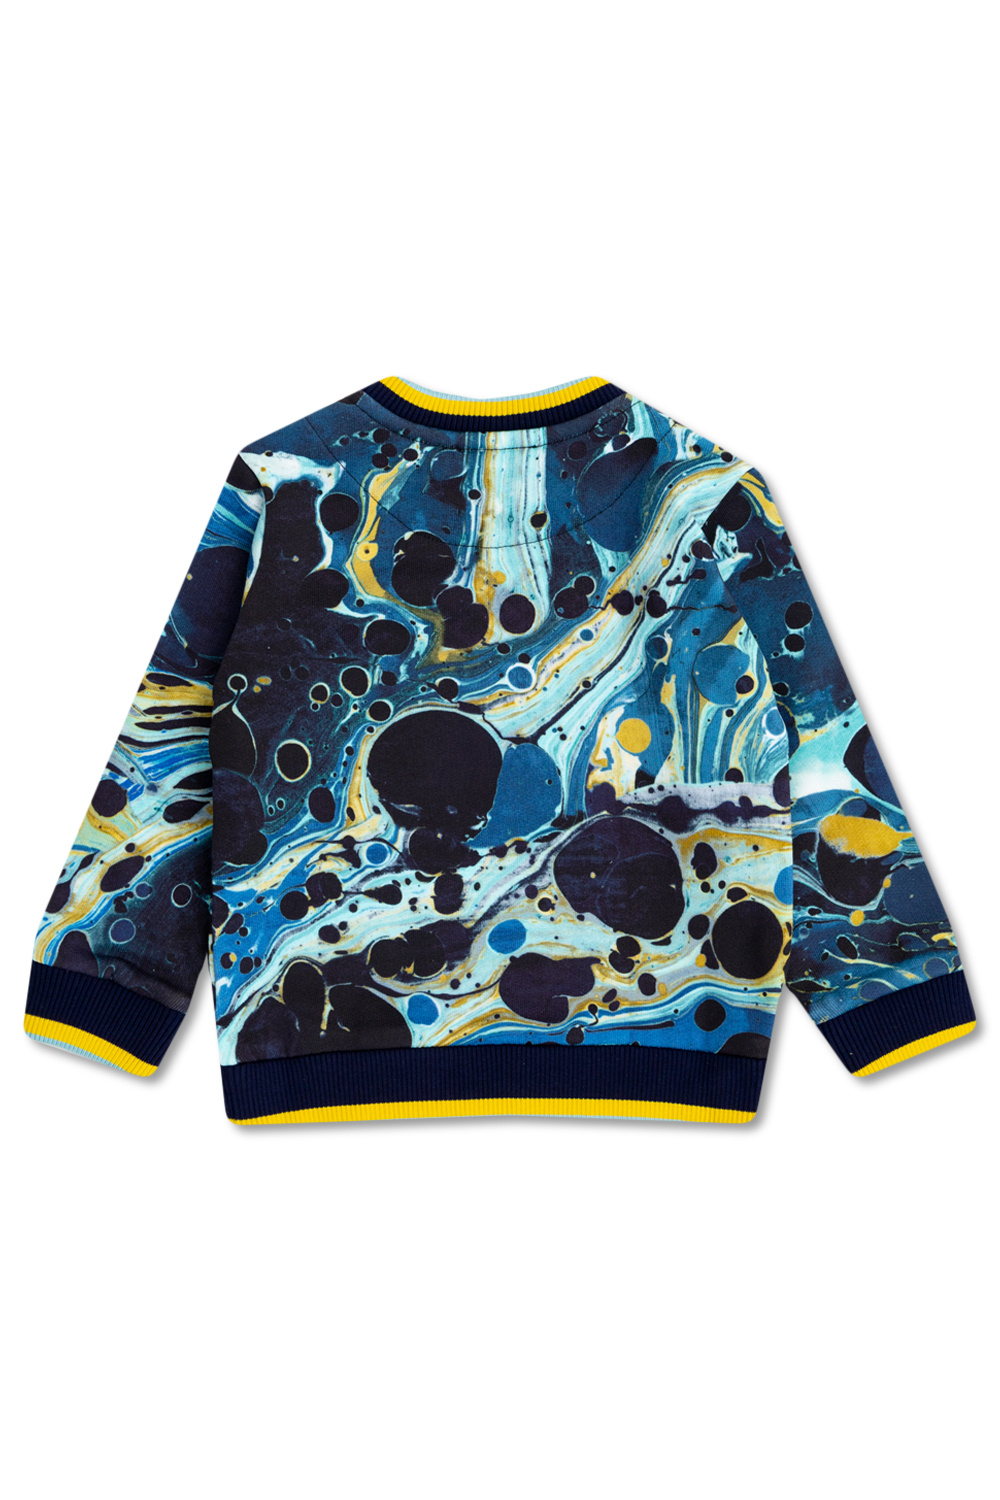 dolce Portofino & Gabbana Kids Patterned sweatshirt